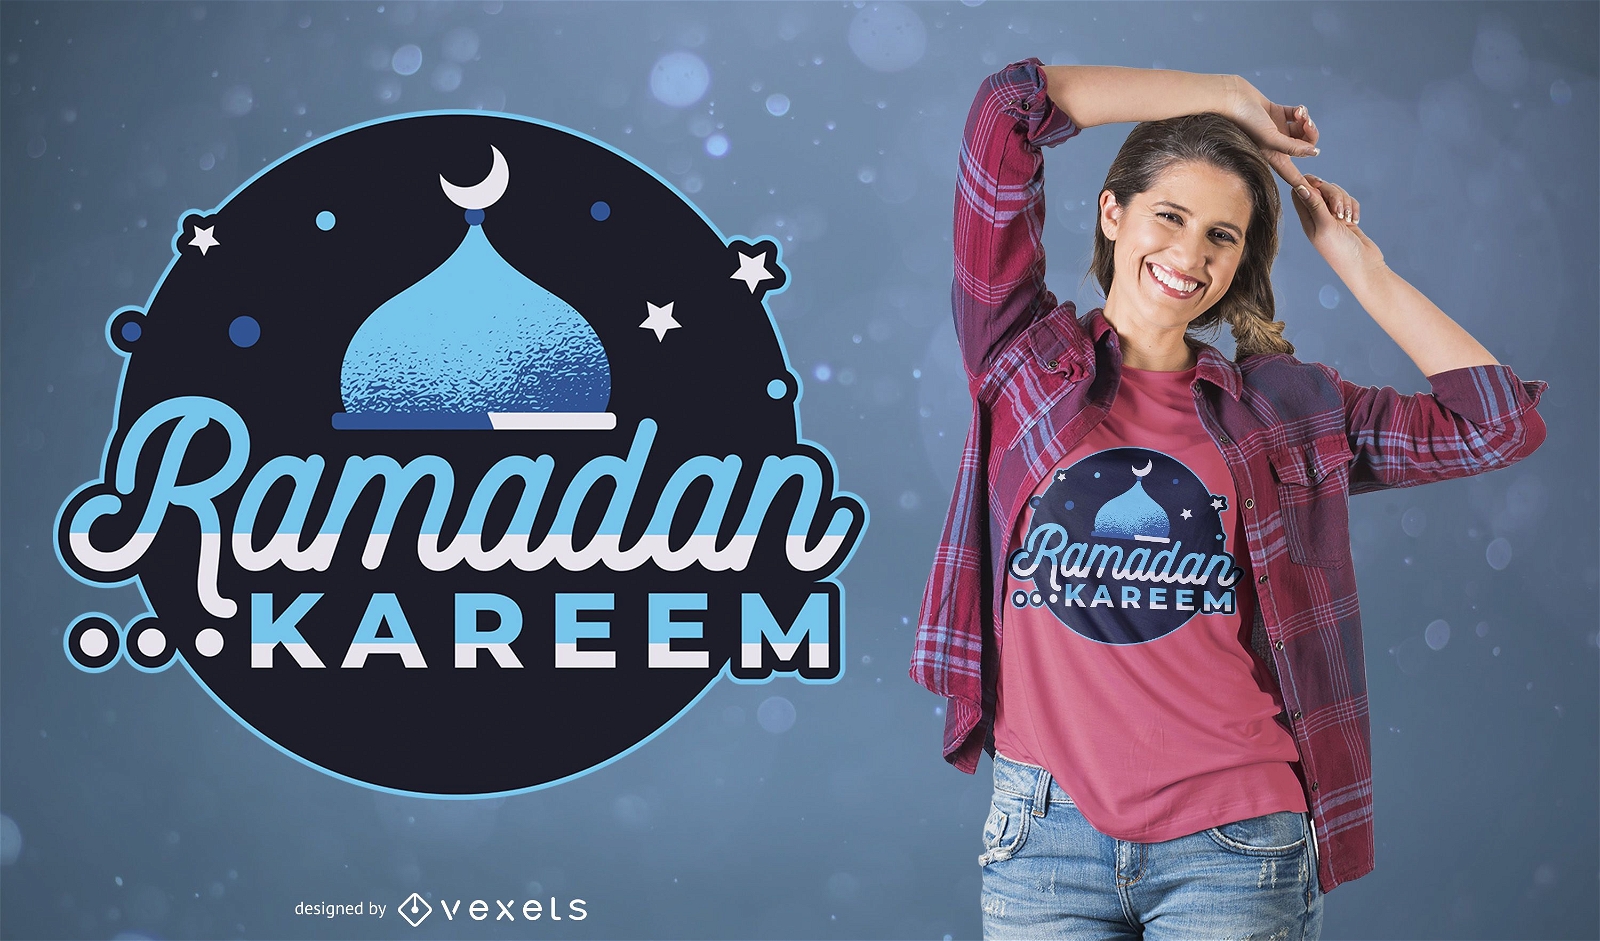 Ramadan T-Shirt Design